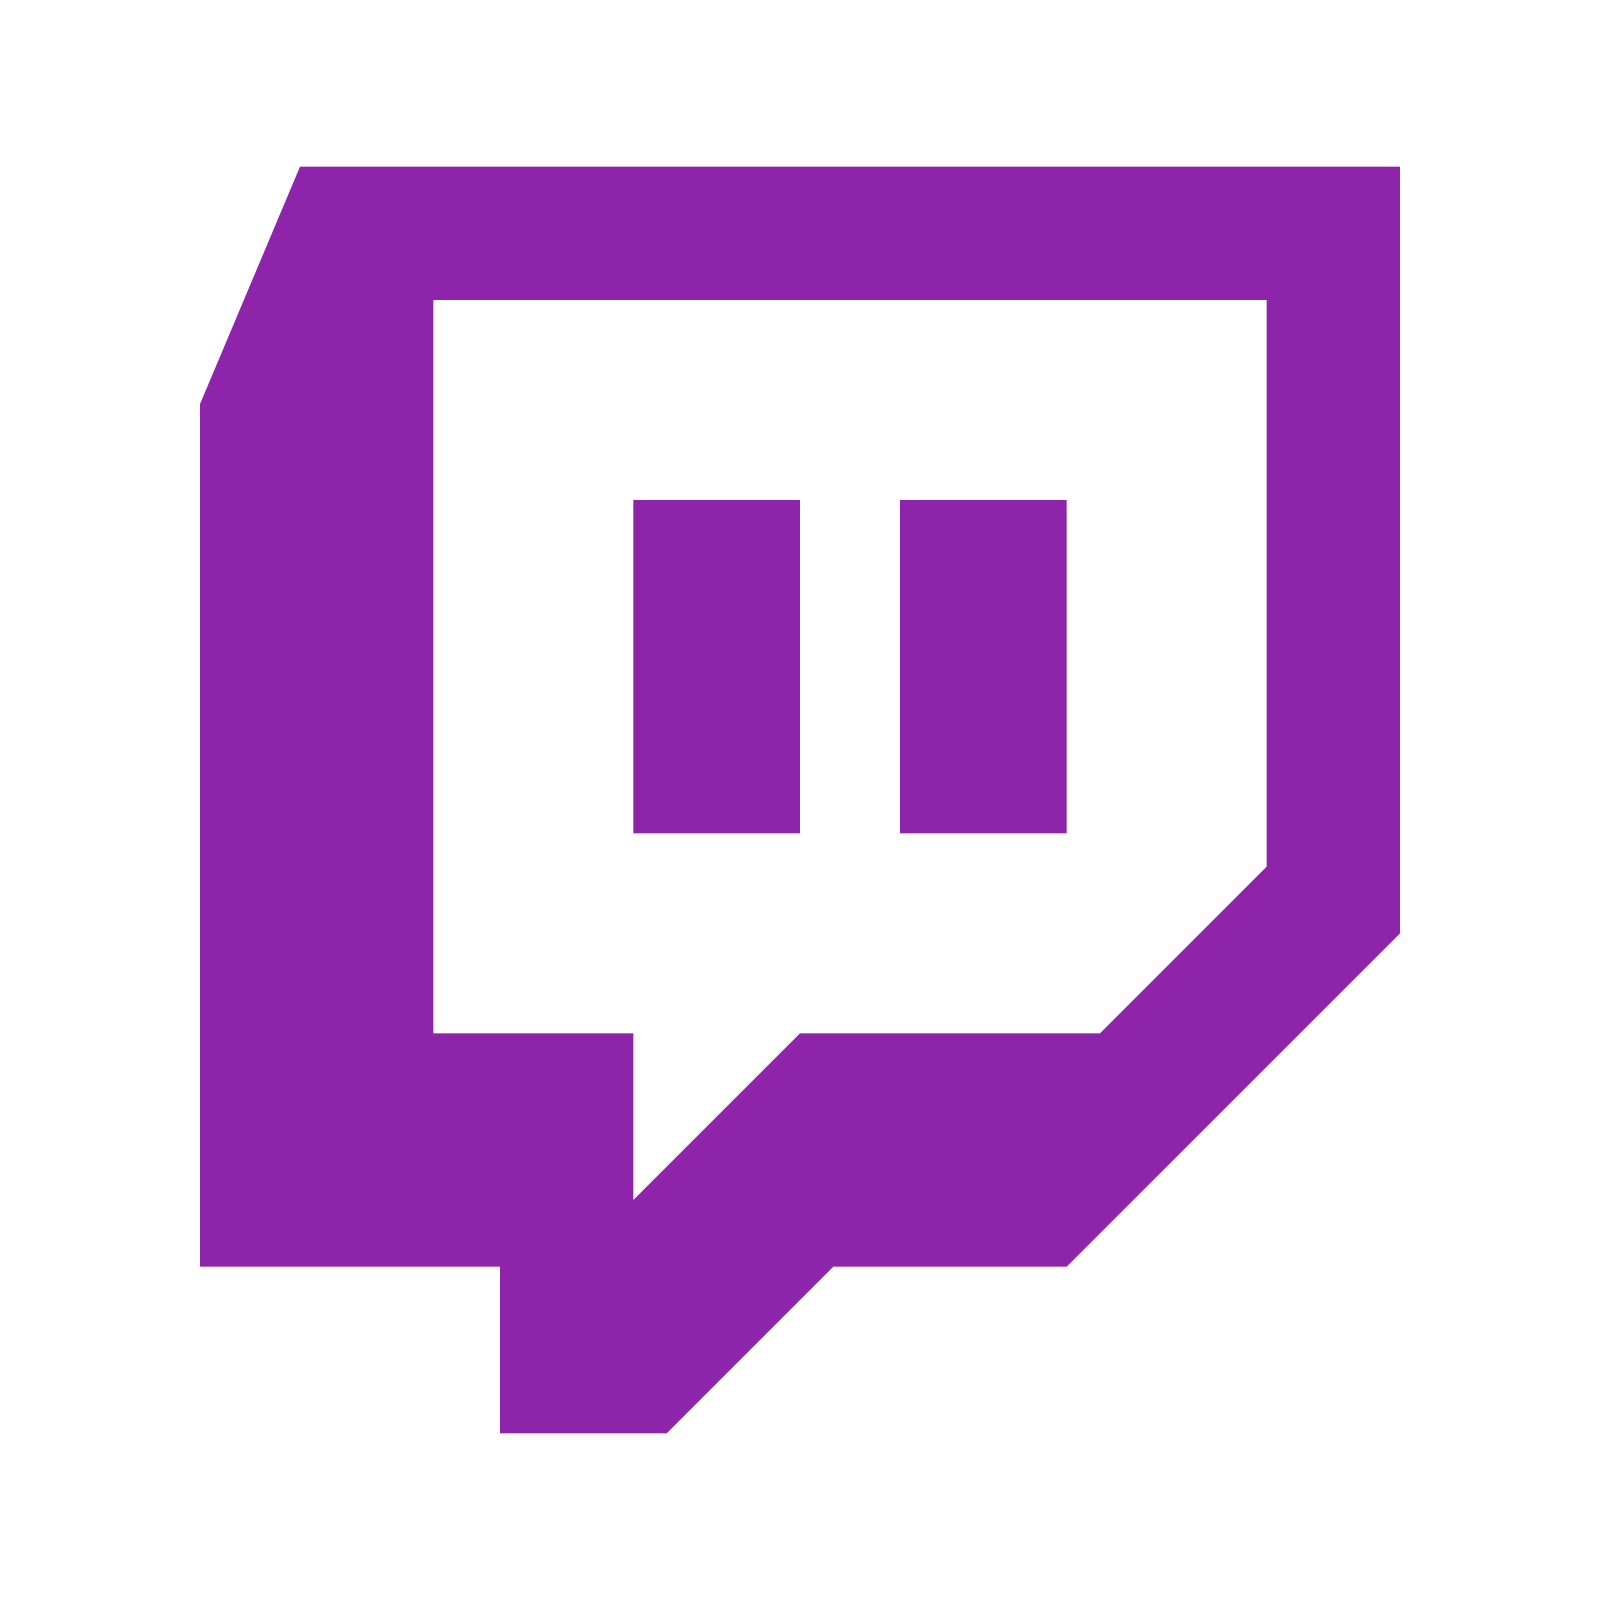 Twitch Logo PNG Photo